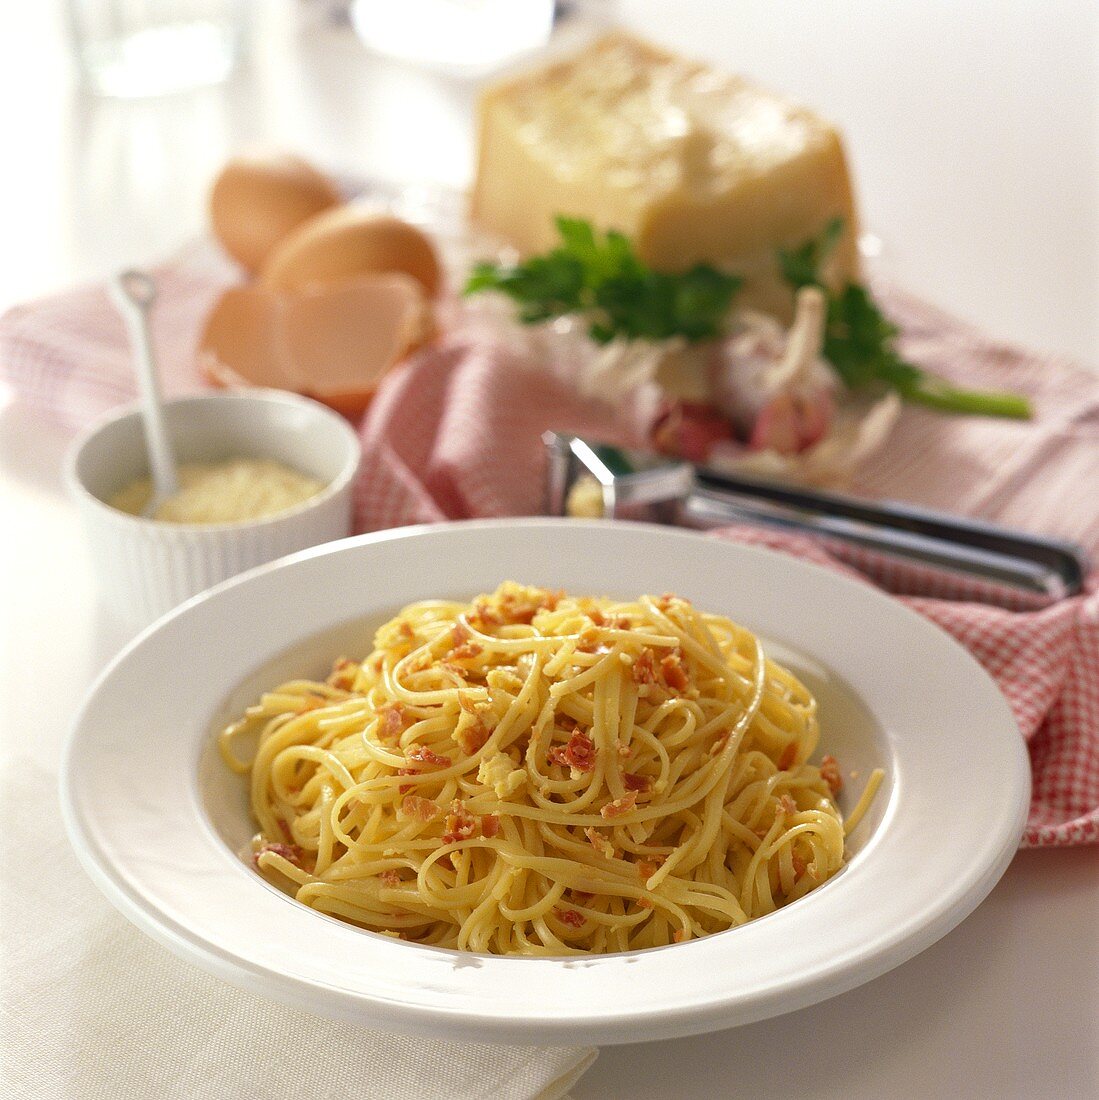 Spaghetti alla carbonara (Pasta with bacon and egg sauce)